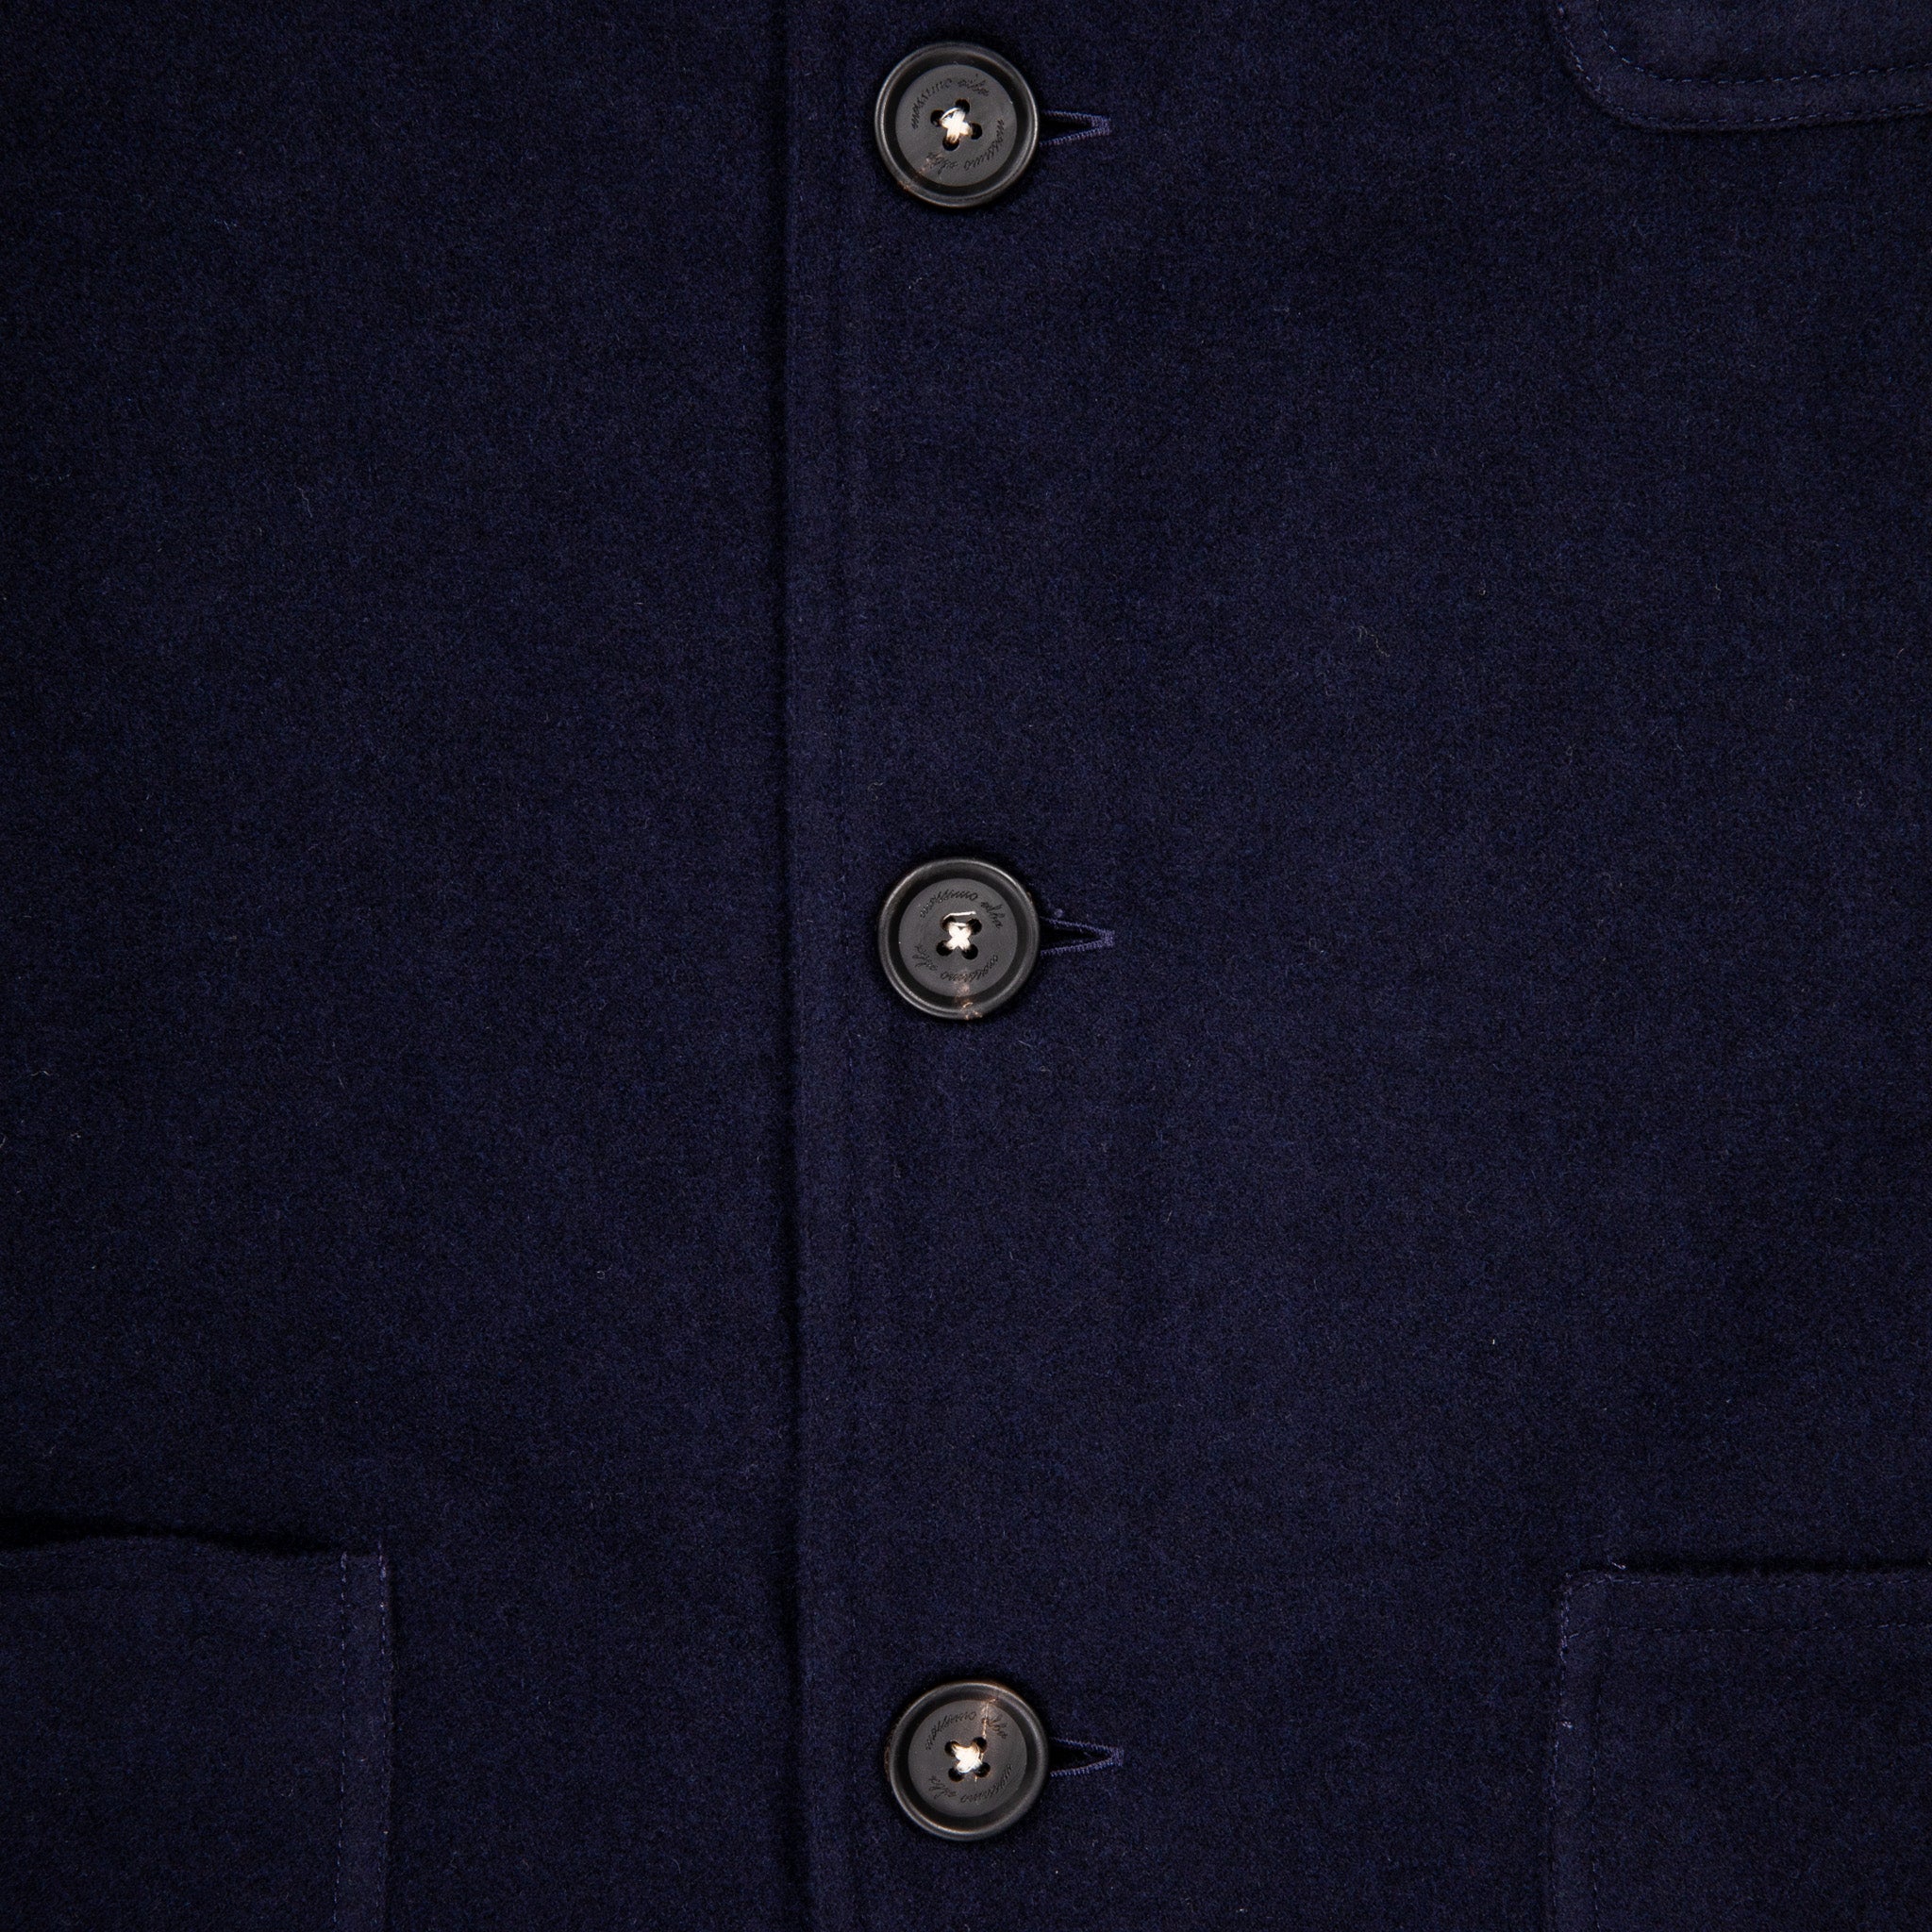 Massimo Alba Florida Shirt Jacket Dark blue